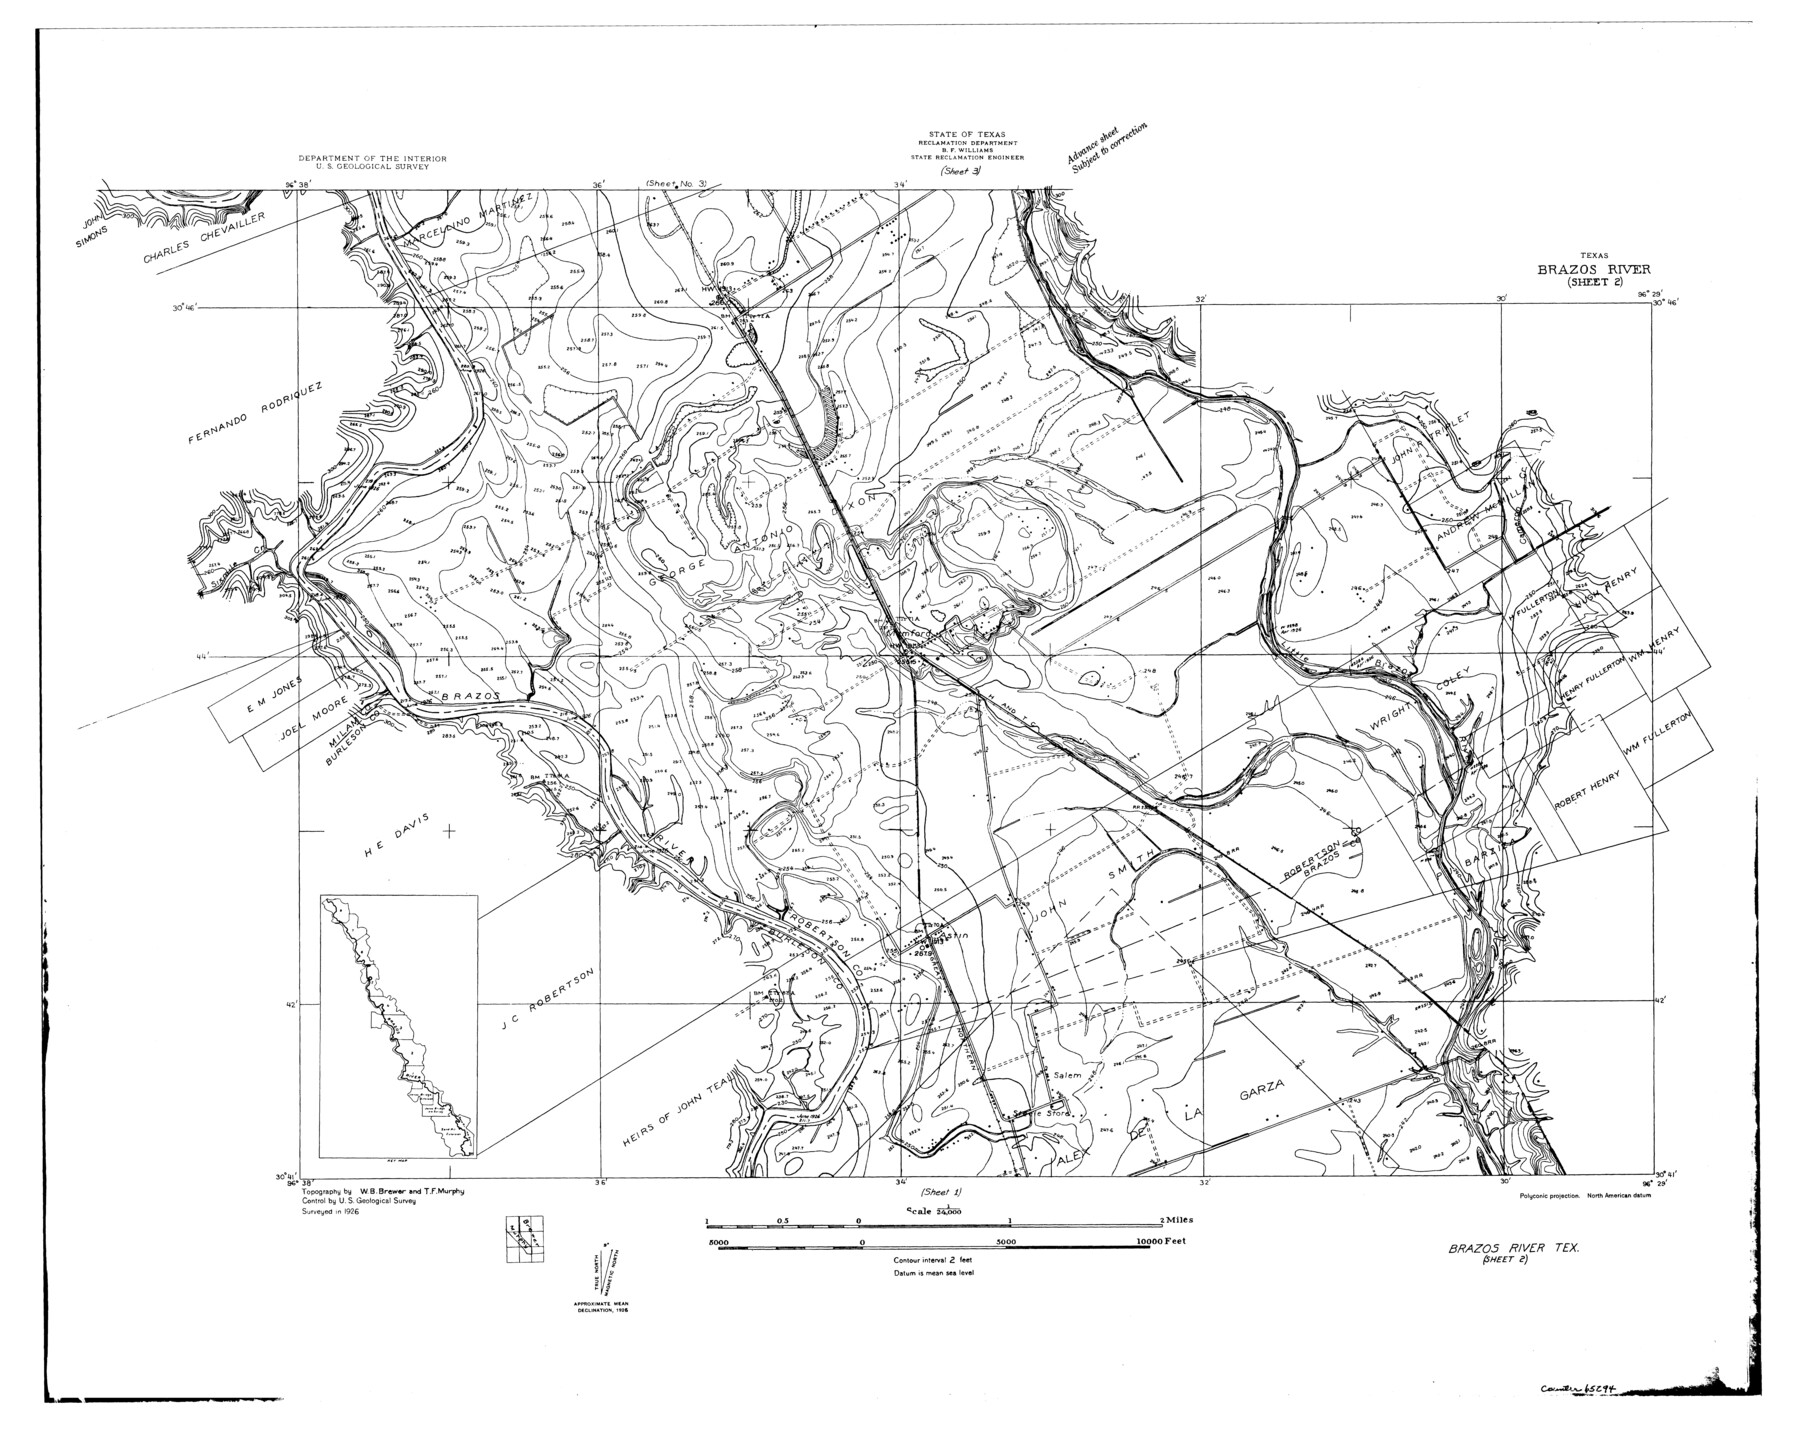 65294, Brazos River, Brazos River Sheet 2, General Map Collection